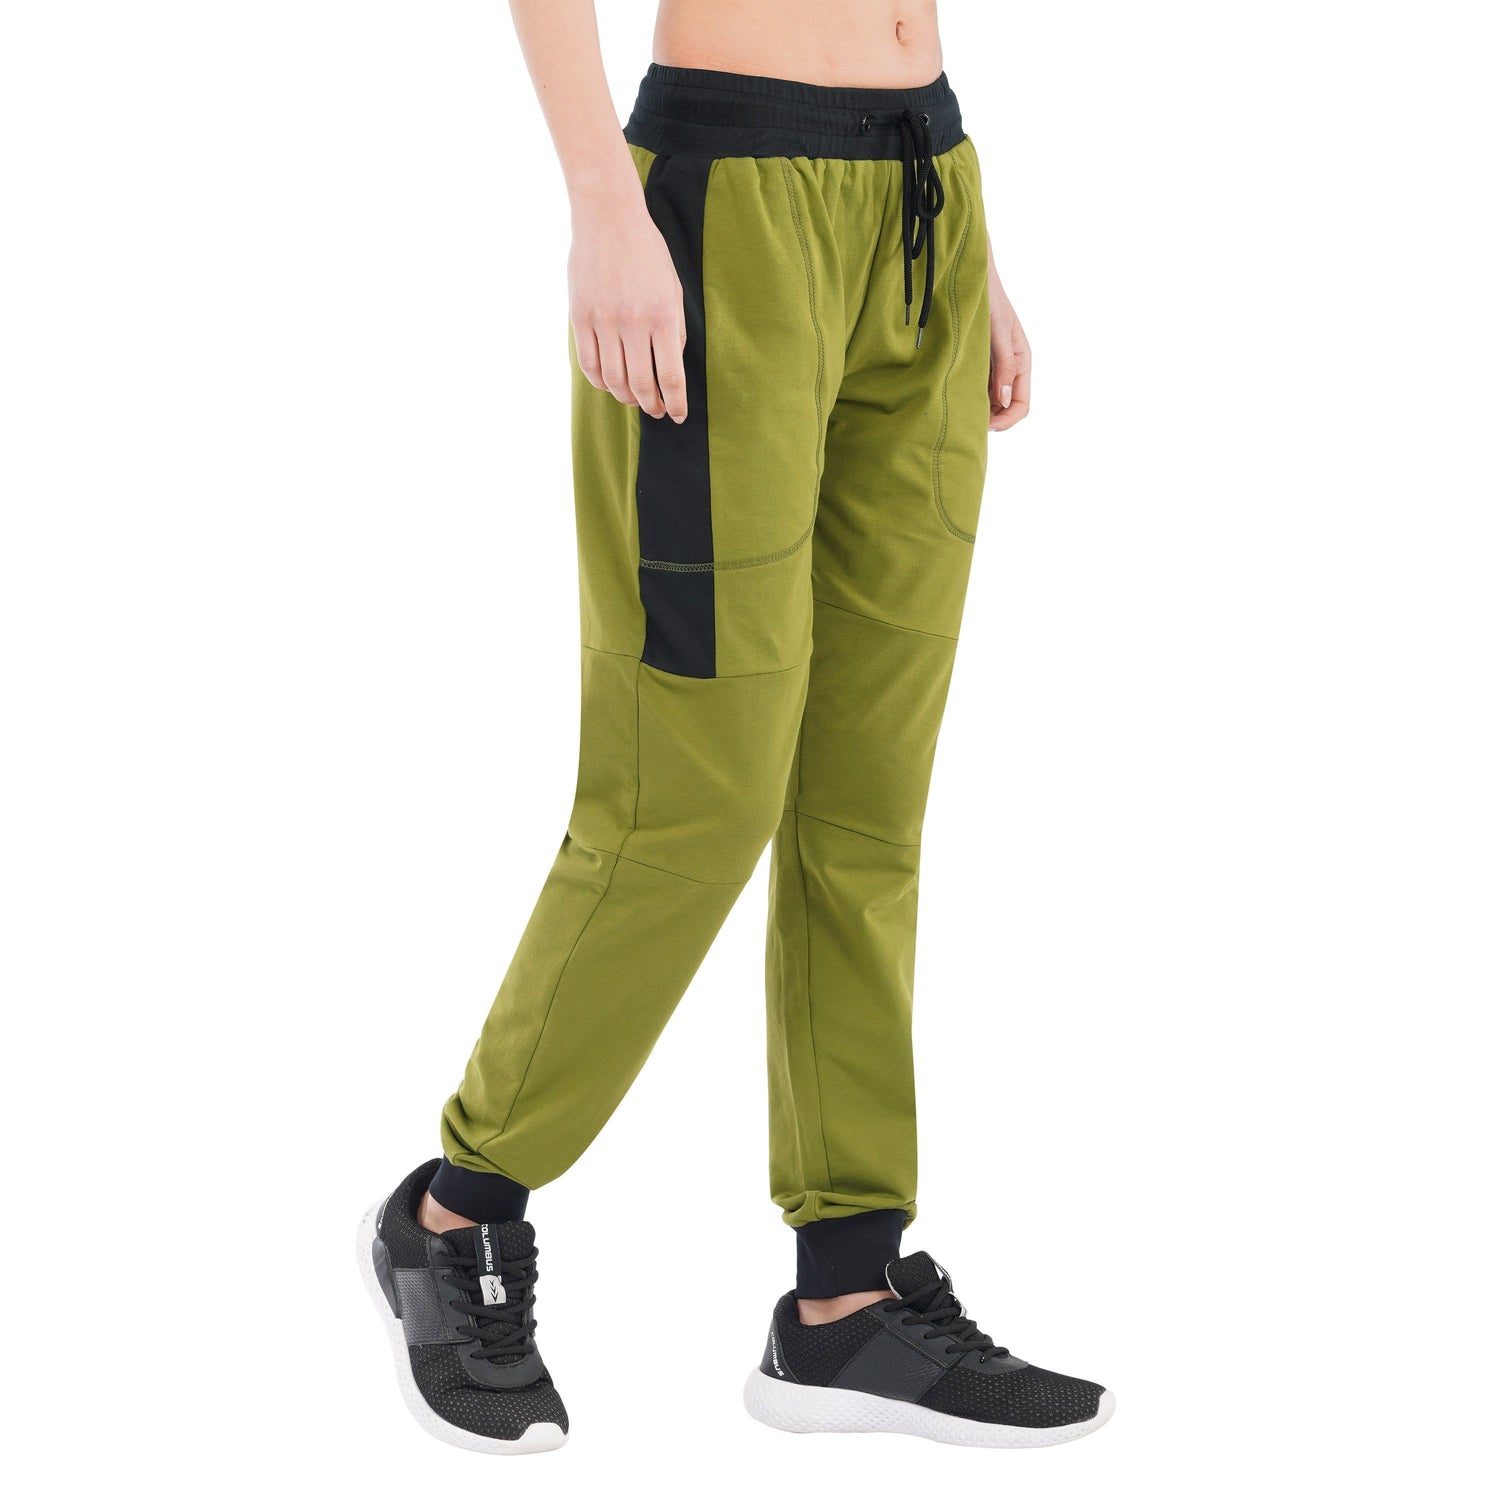 SLAY. Women's Olive Green Joggers-clothing-to-slay.myshopify.com-Joggers